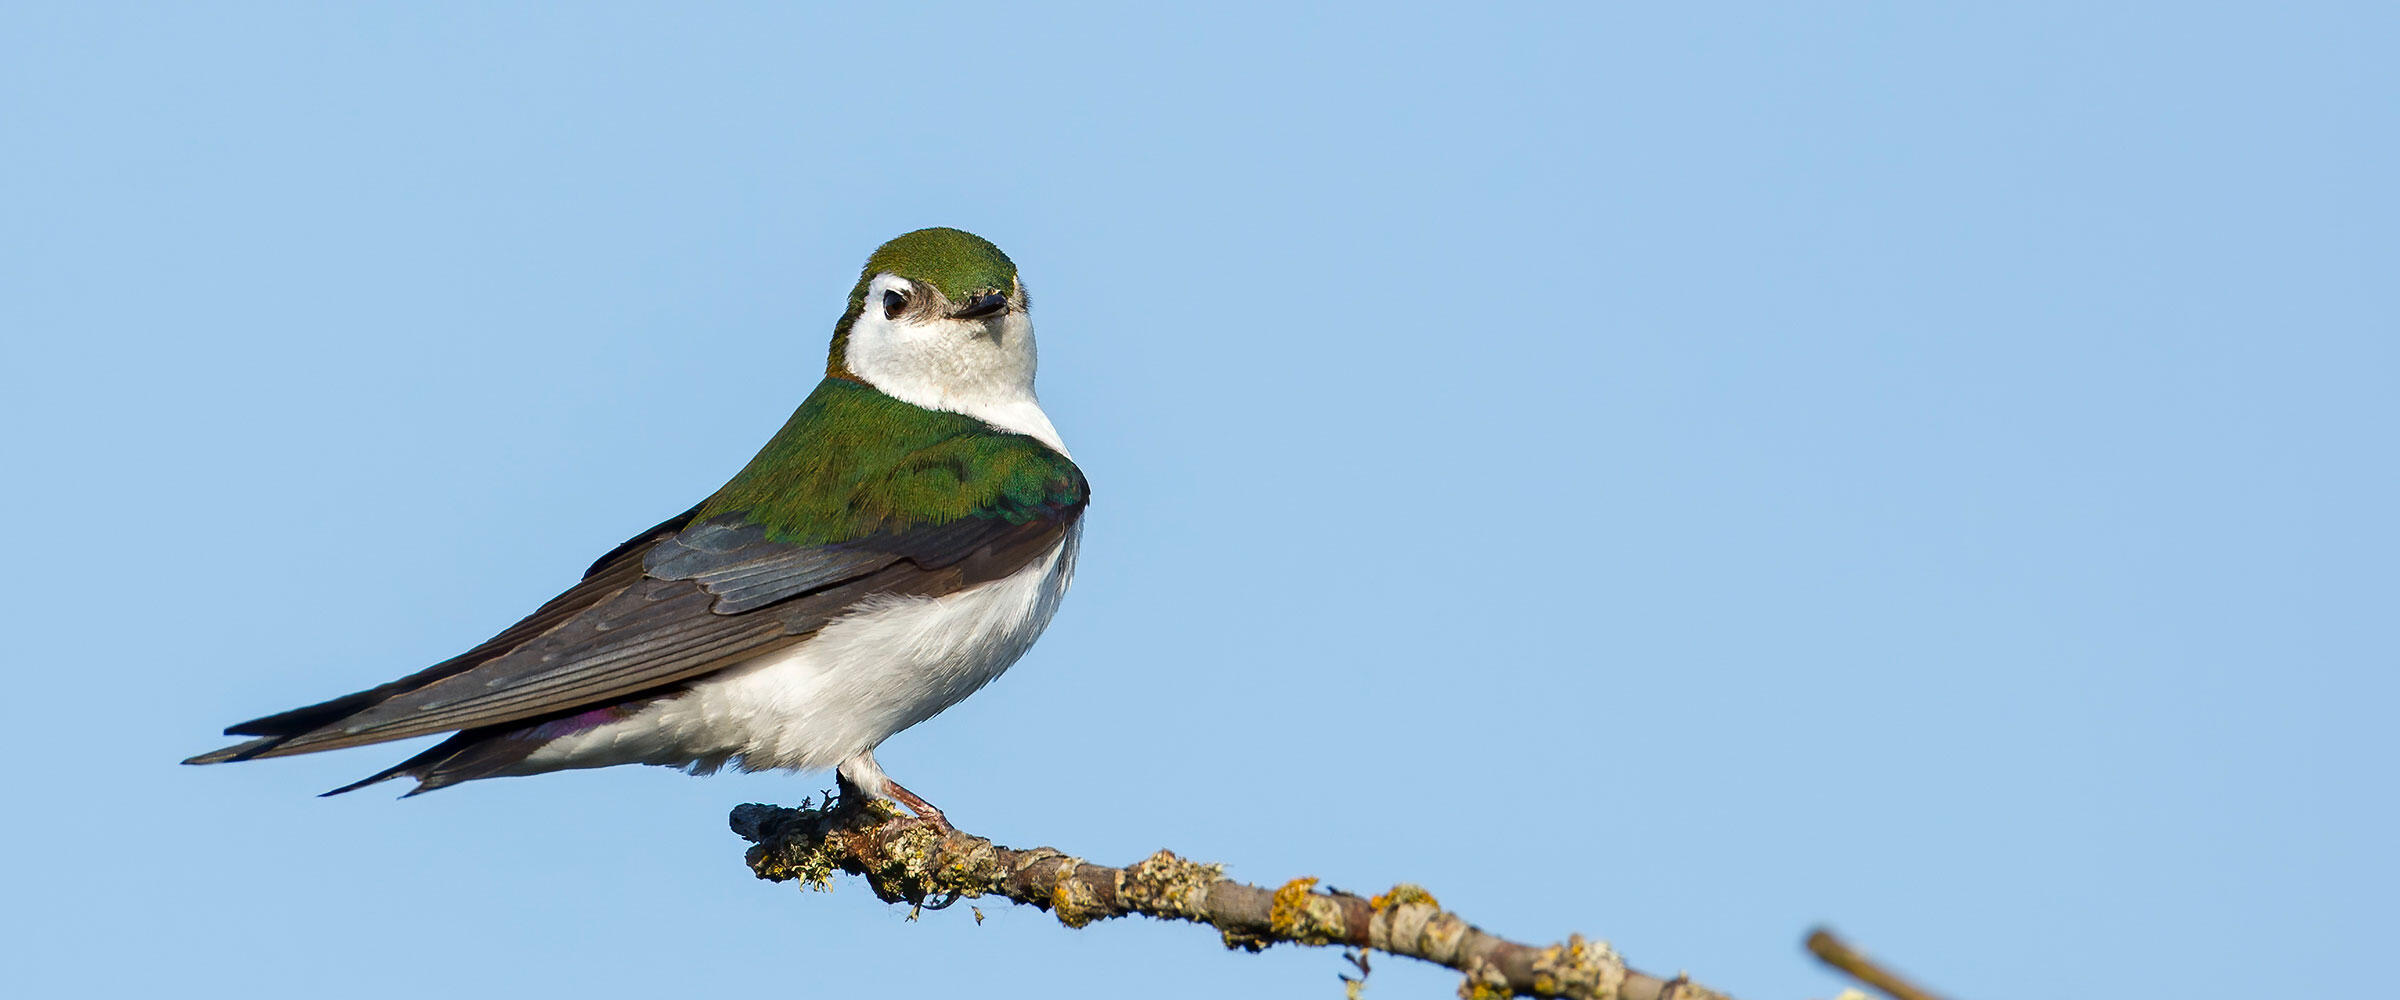 Where to Find Birds in Evergreen | Audubon Rockies